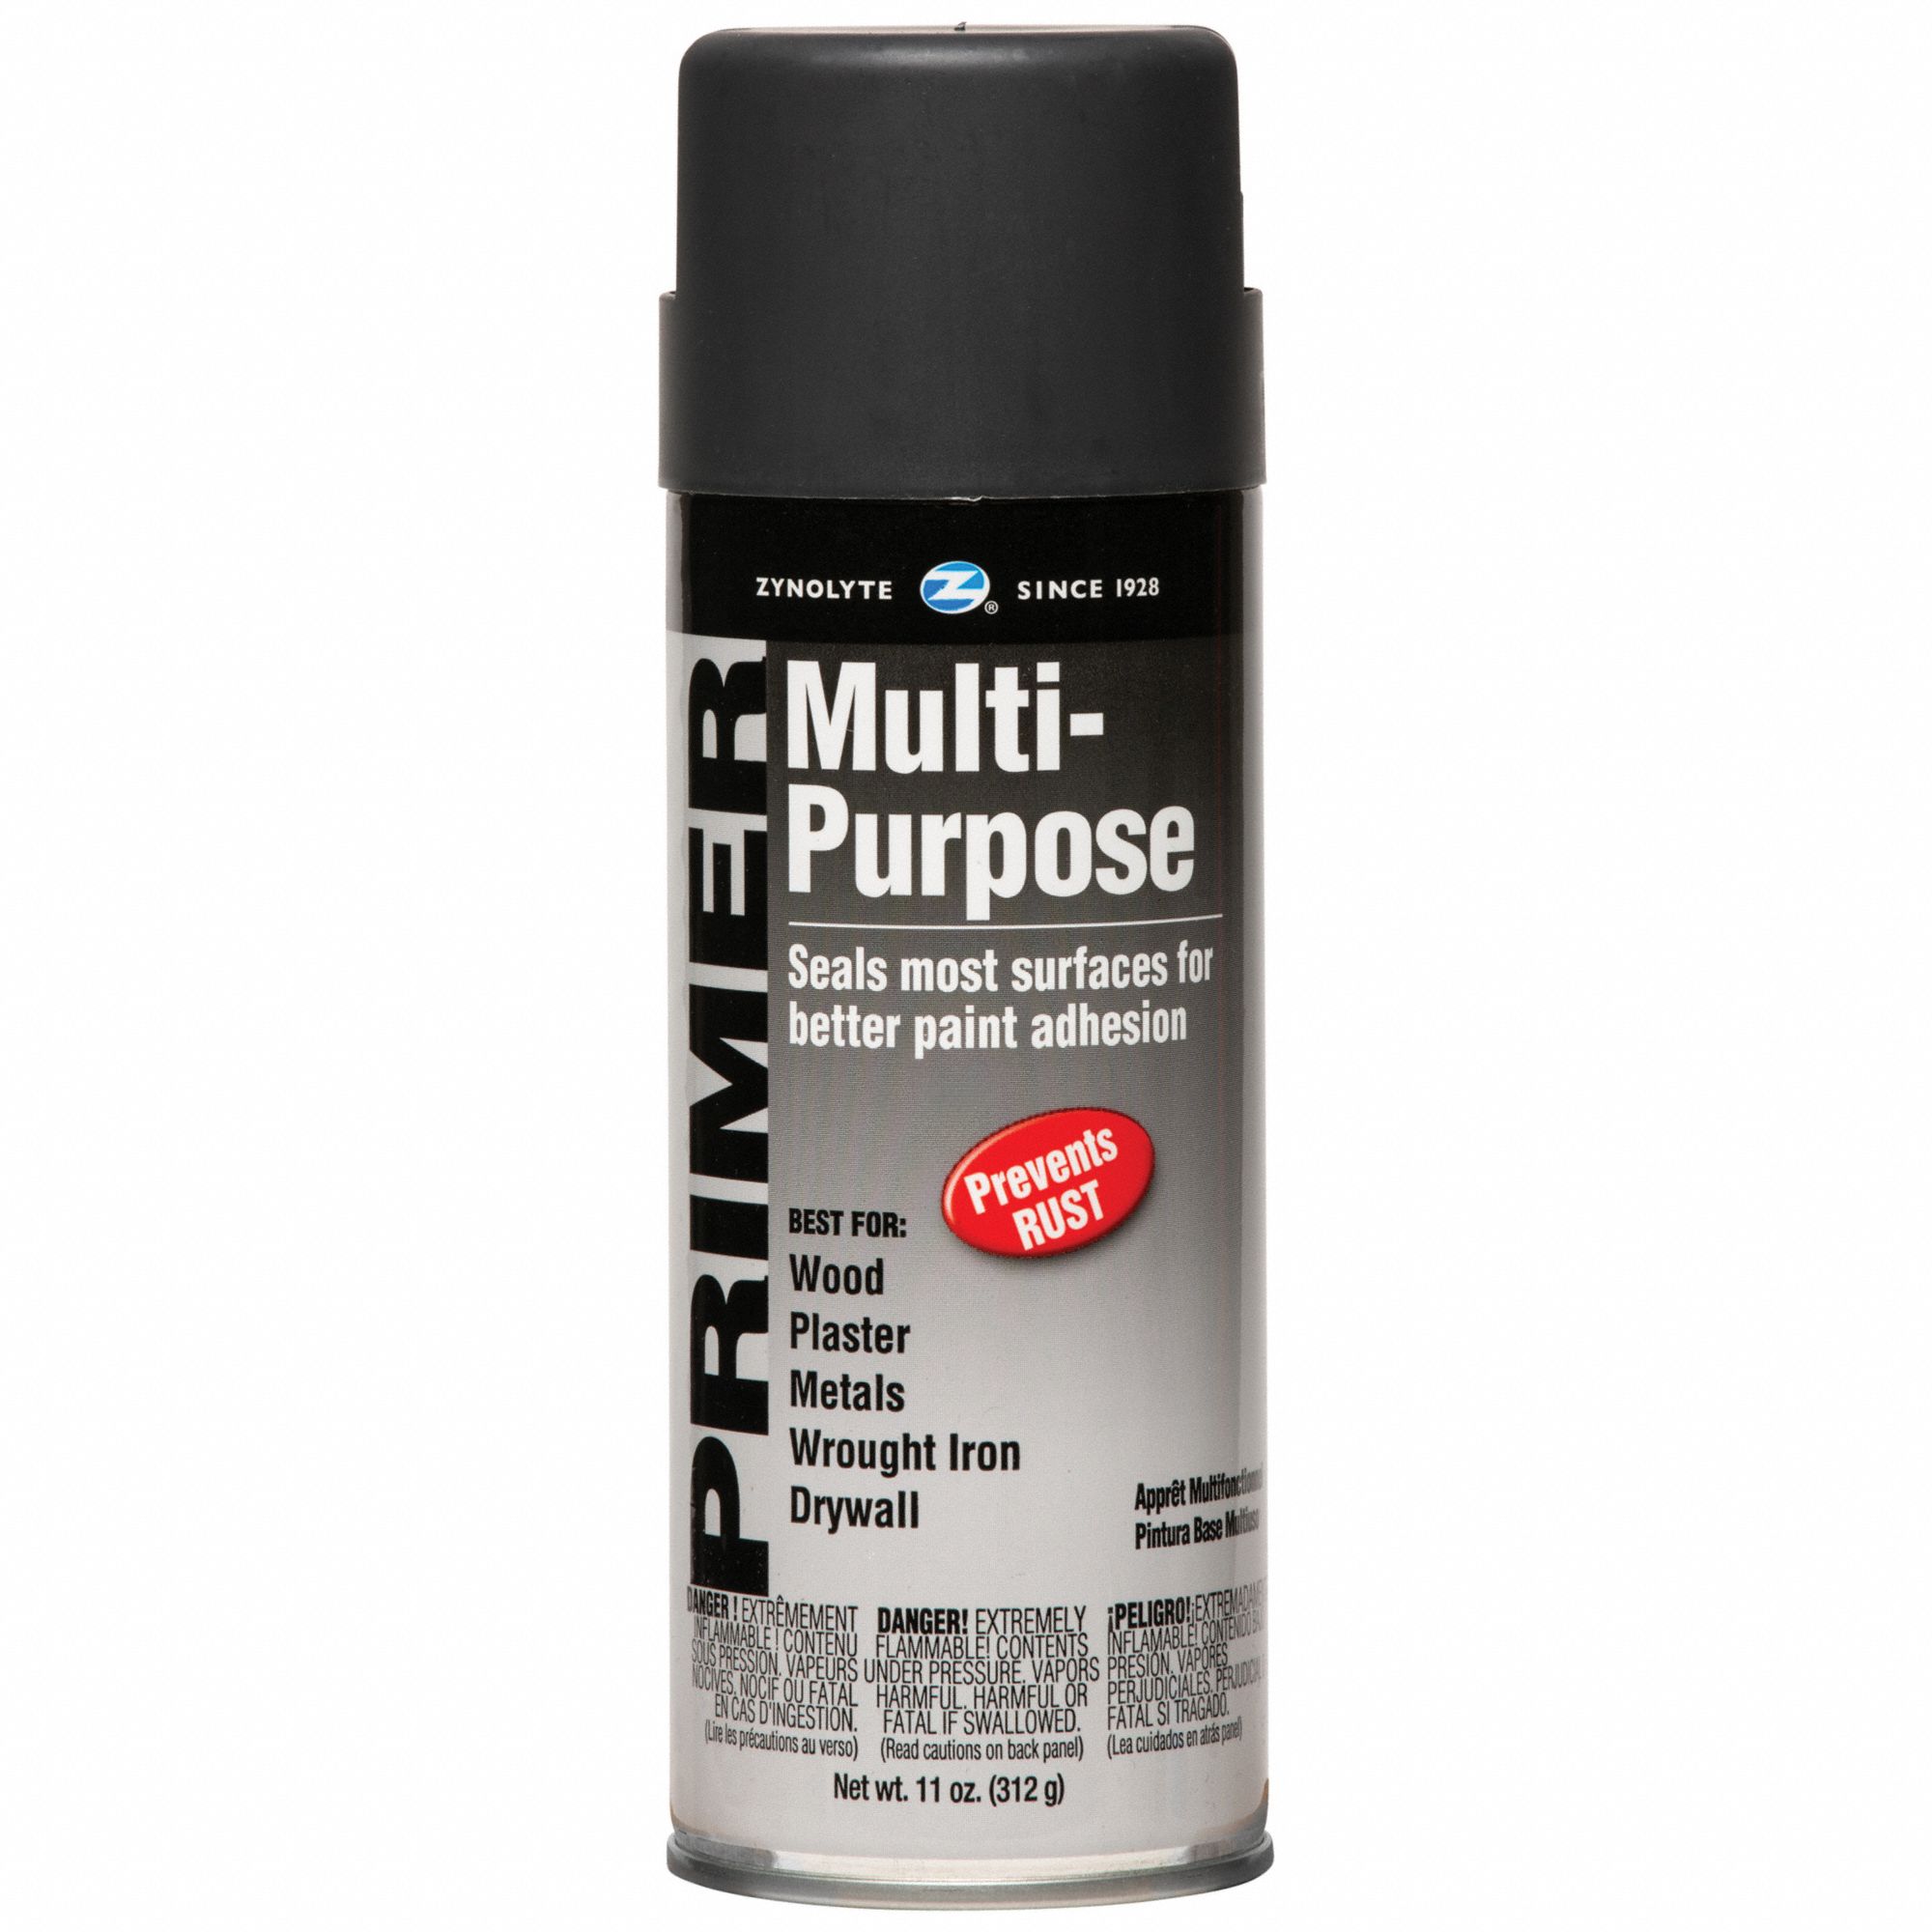 Spray Primer: Gray, Flat, 11 oz Net Wt, 68 sq ft Coverage, 30 min Dry Time